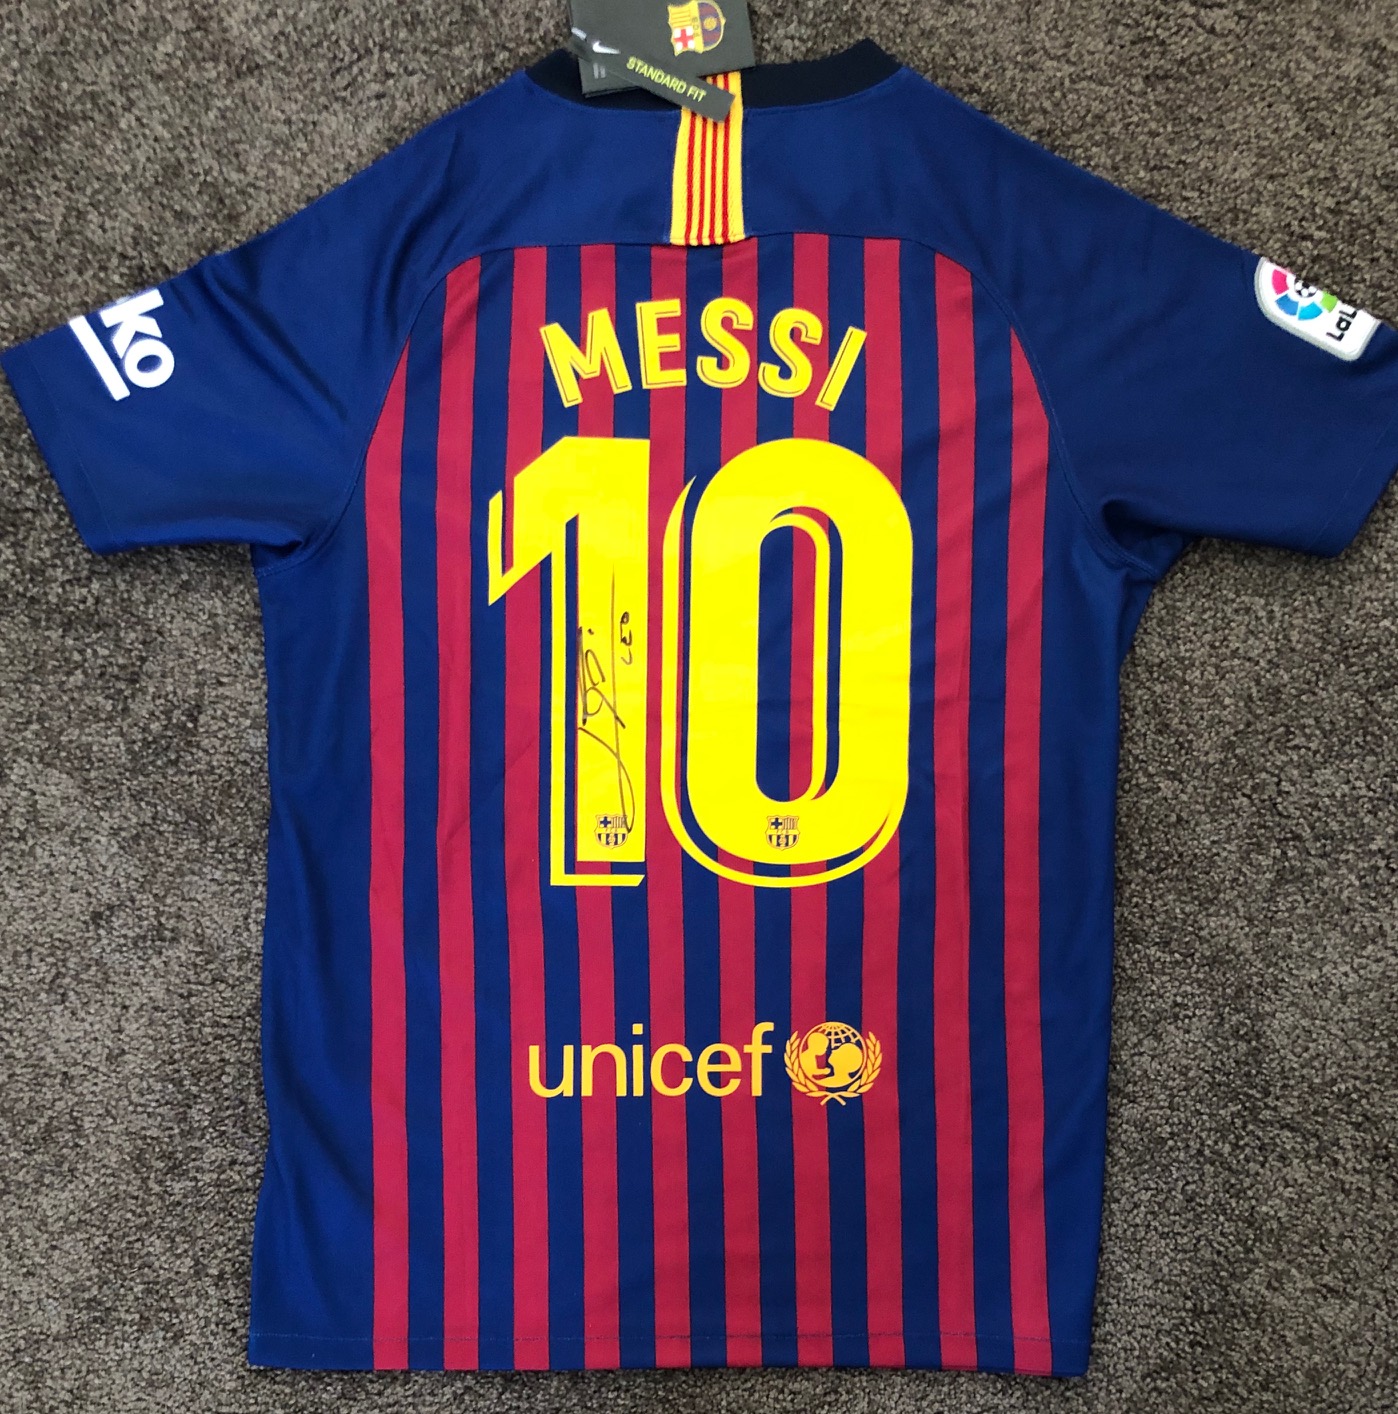 Lionel Messi shirt :: Australian Memorabilia Association